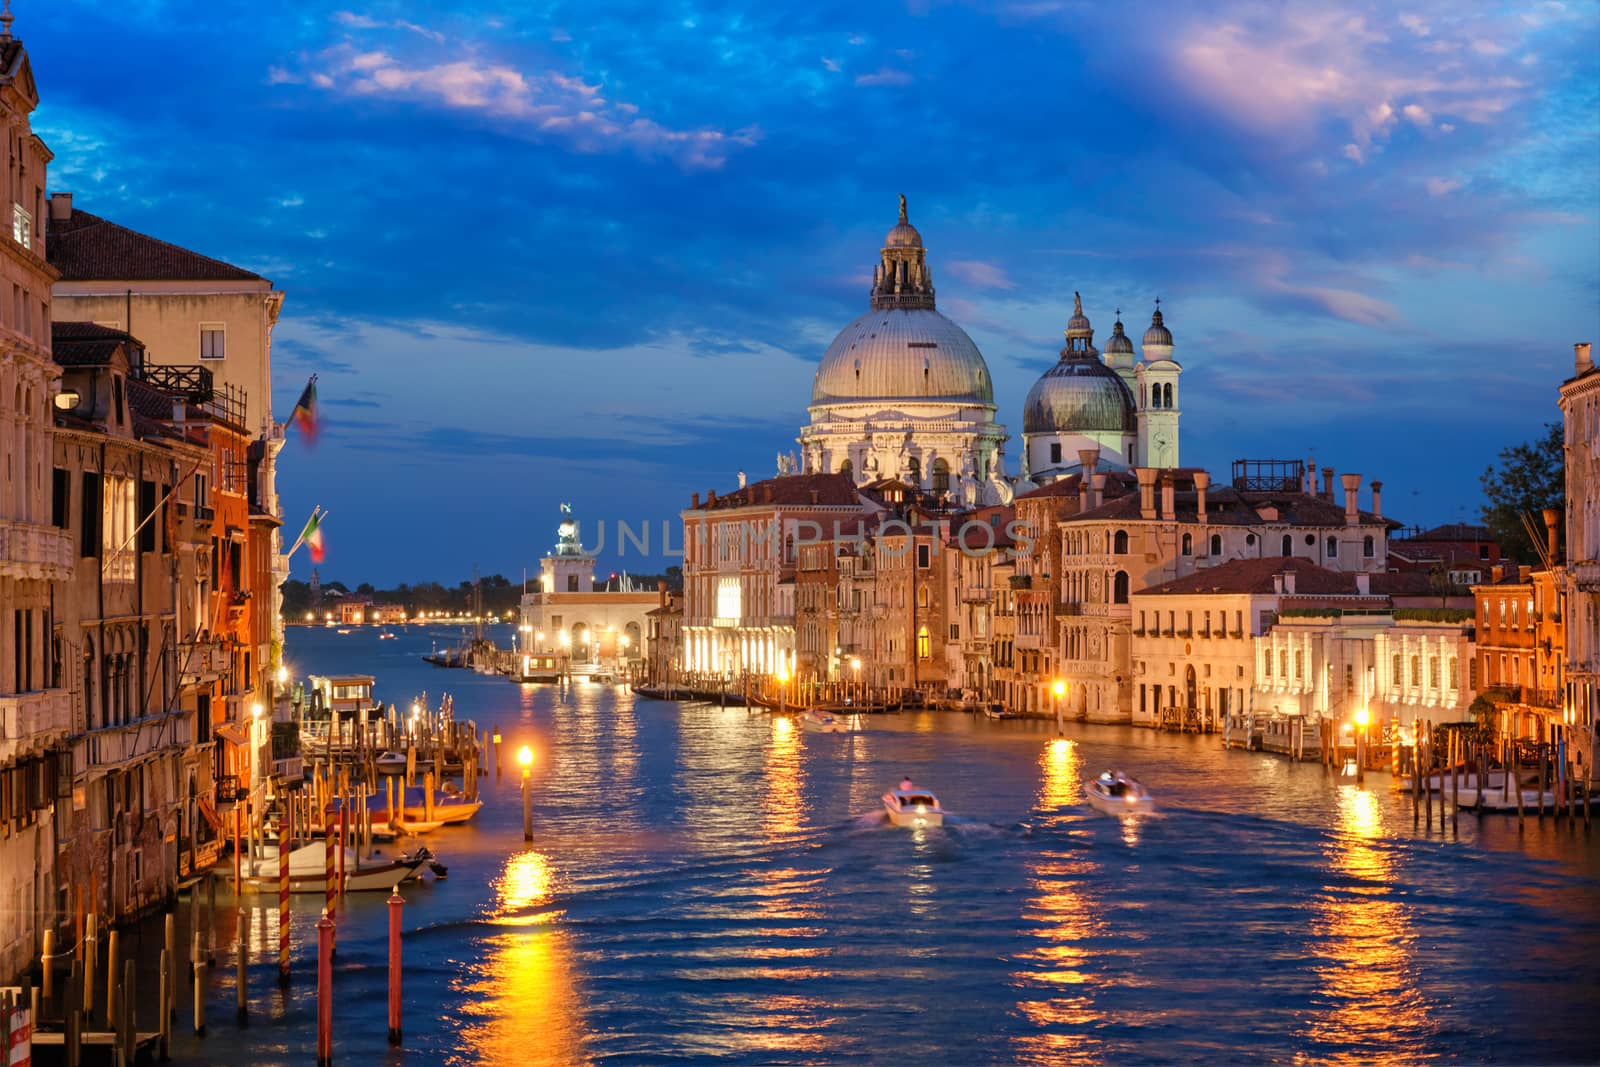 View of Venice Grand Canal and Santa Maria della Salute church in the evening by dimol